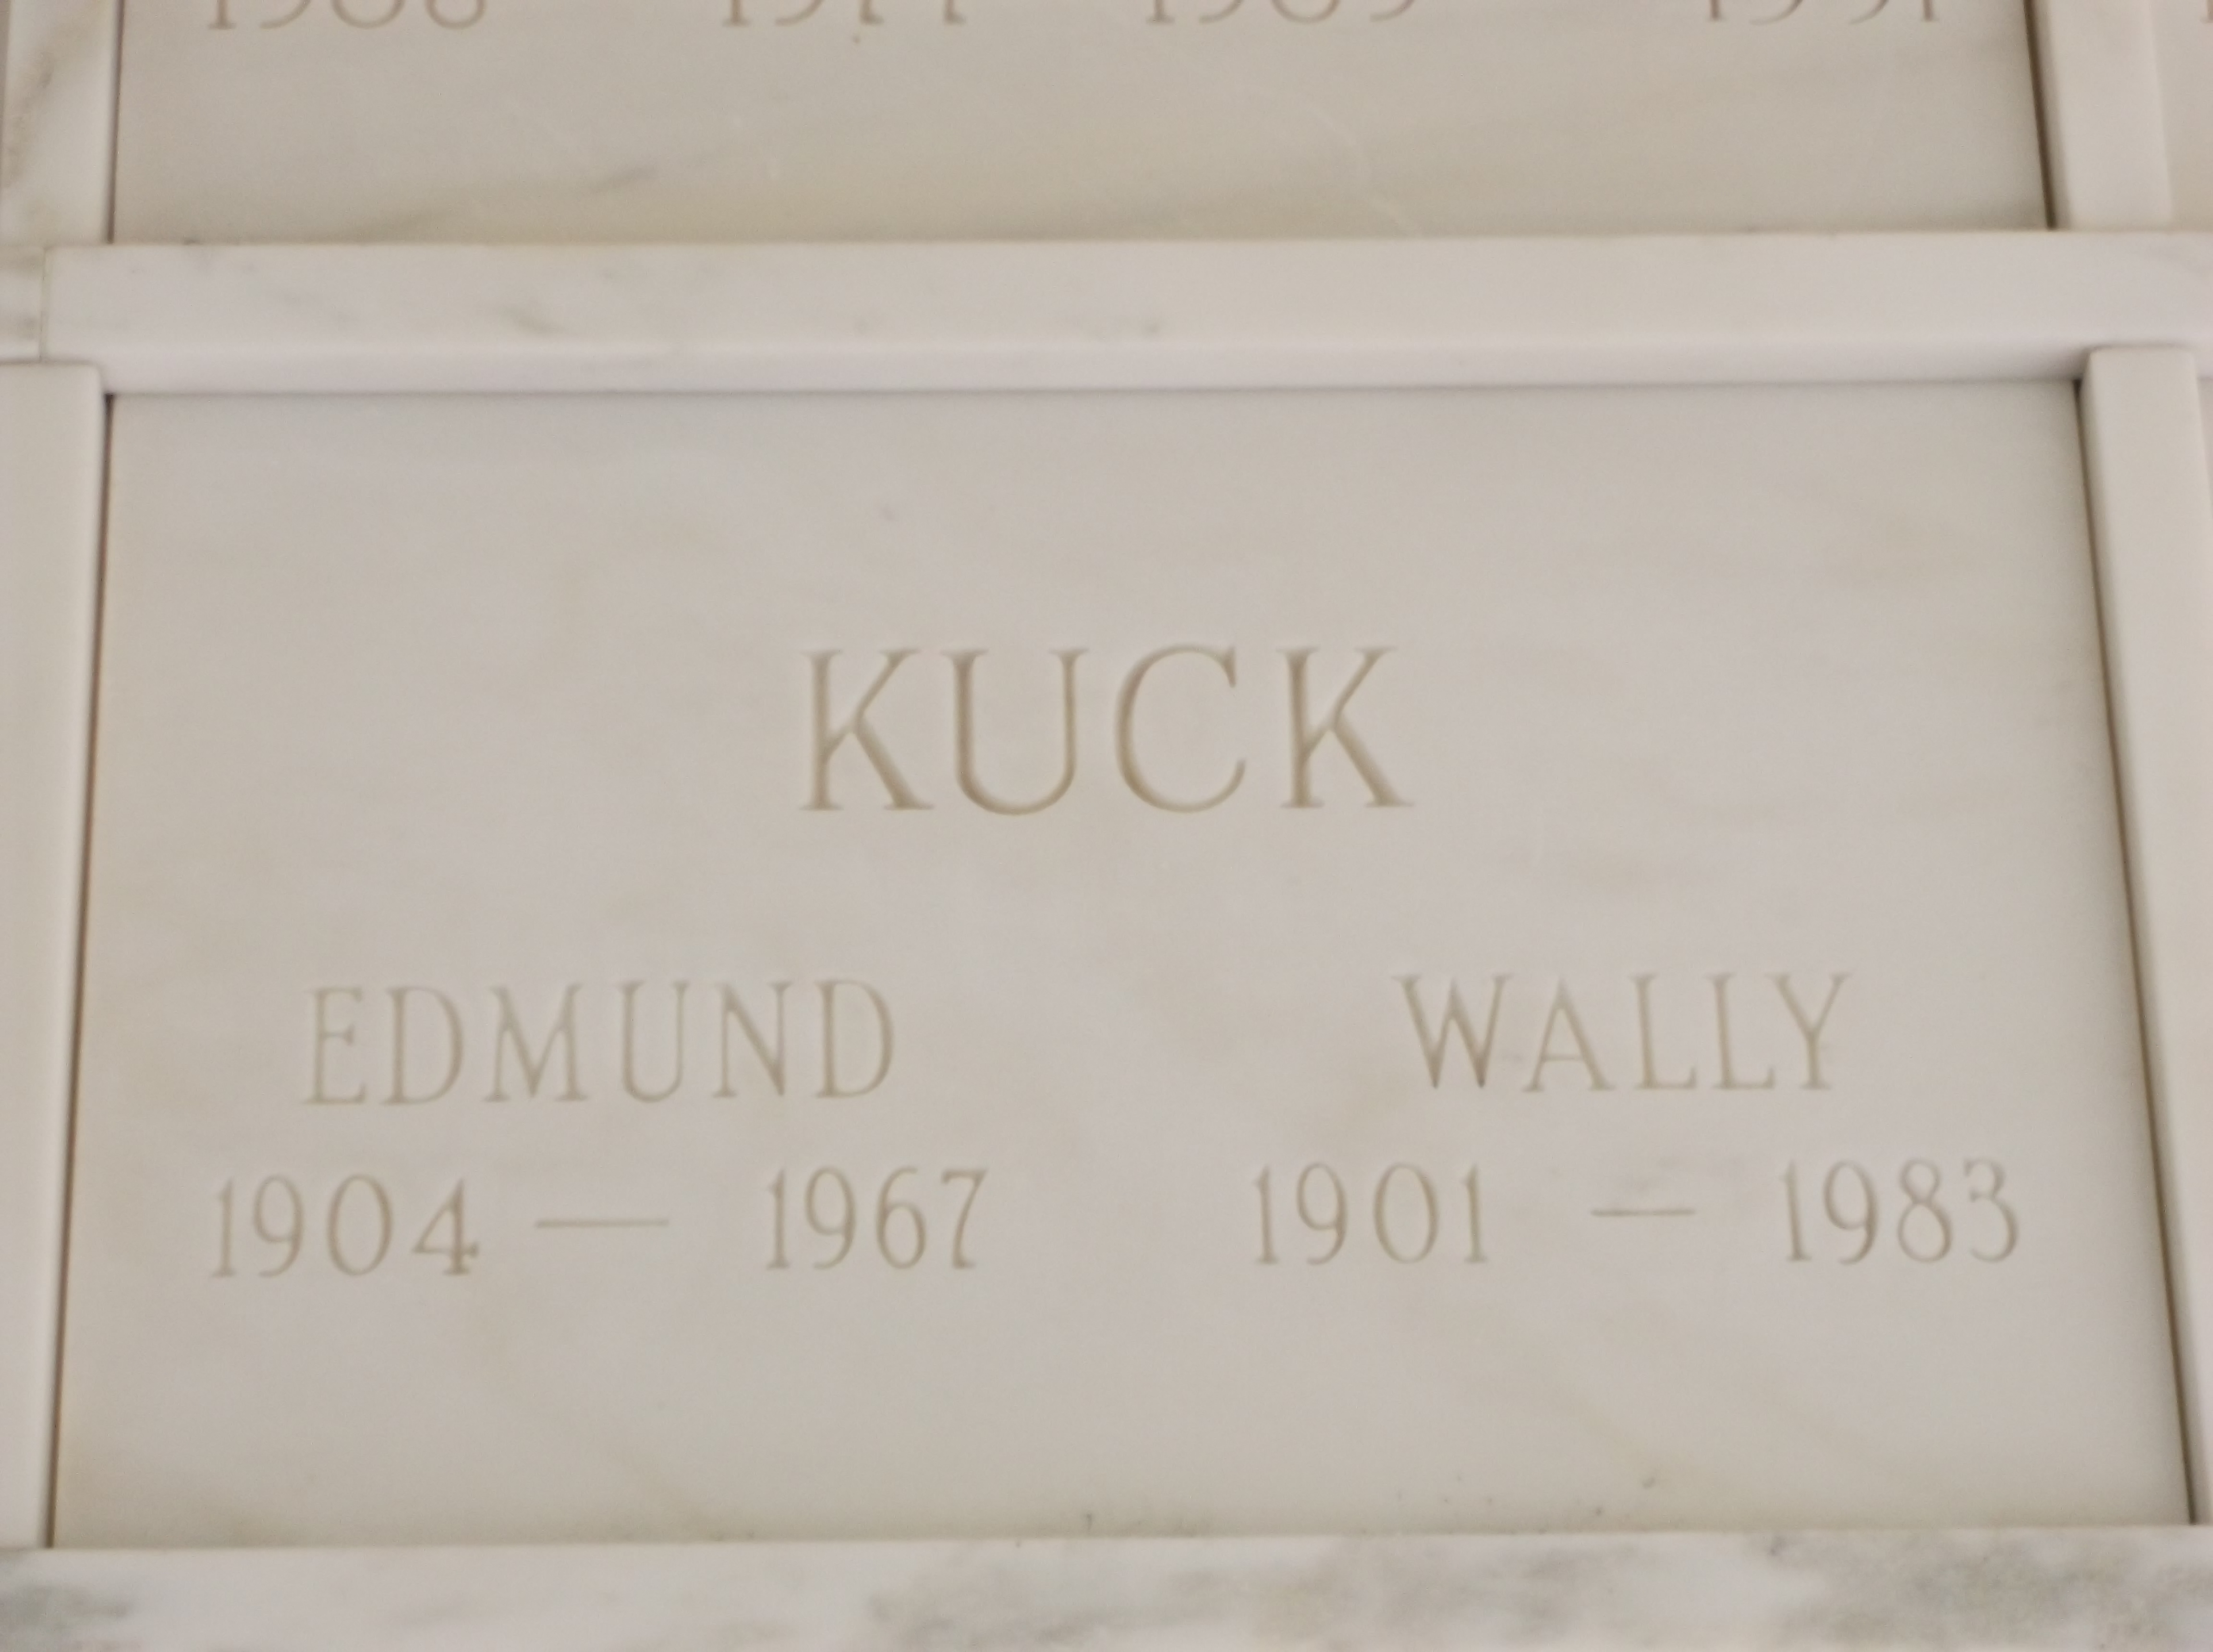 Edmund Kuck